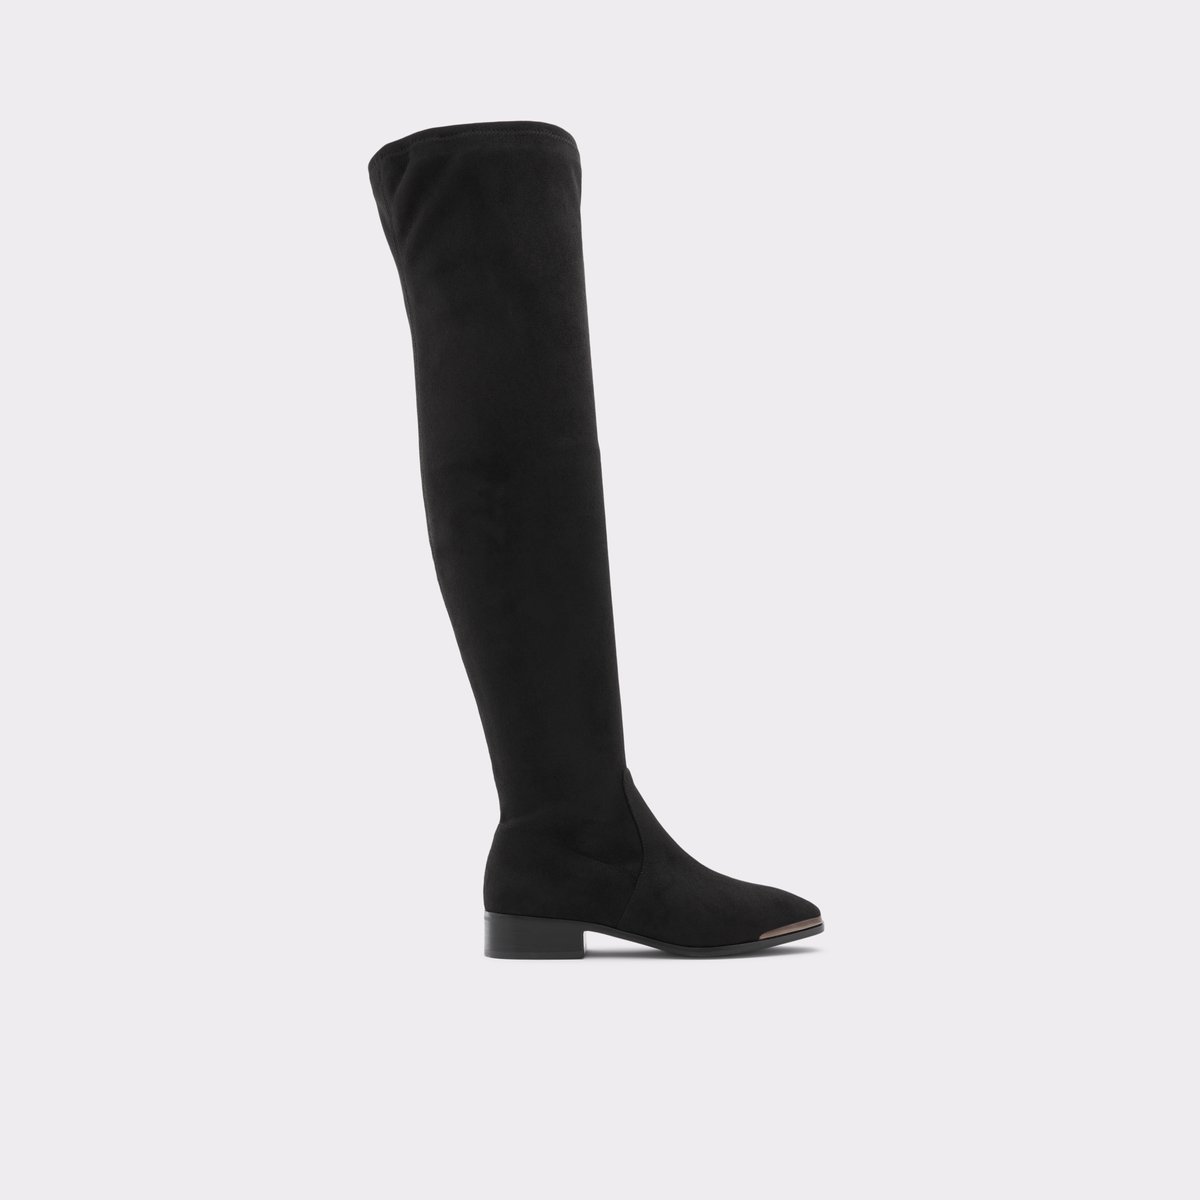 Sevaunna Black Textile Women's Casual boots | ALDO Canada